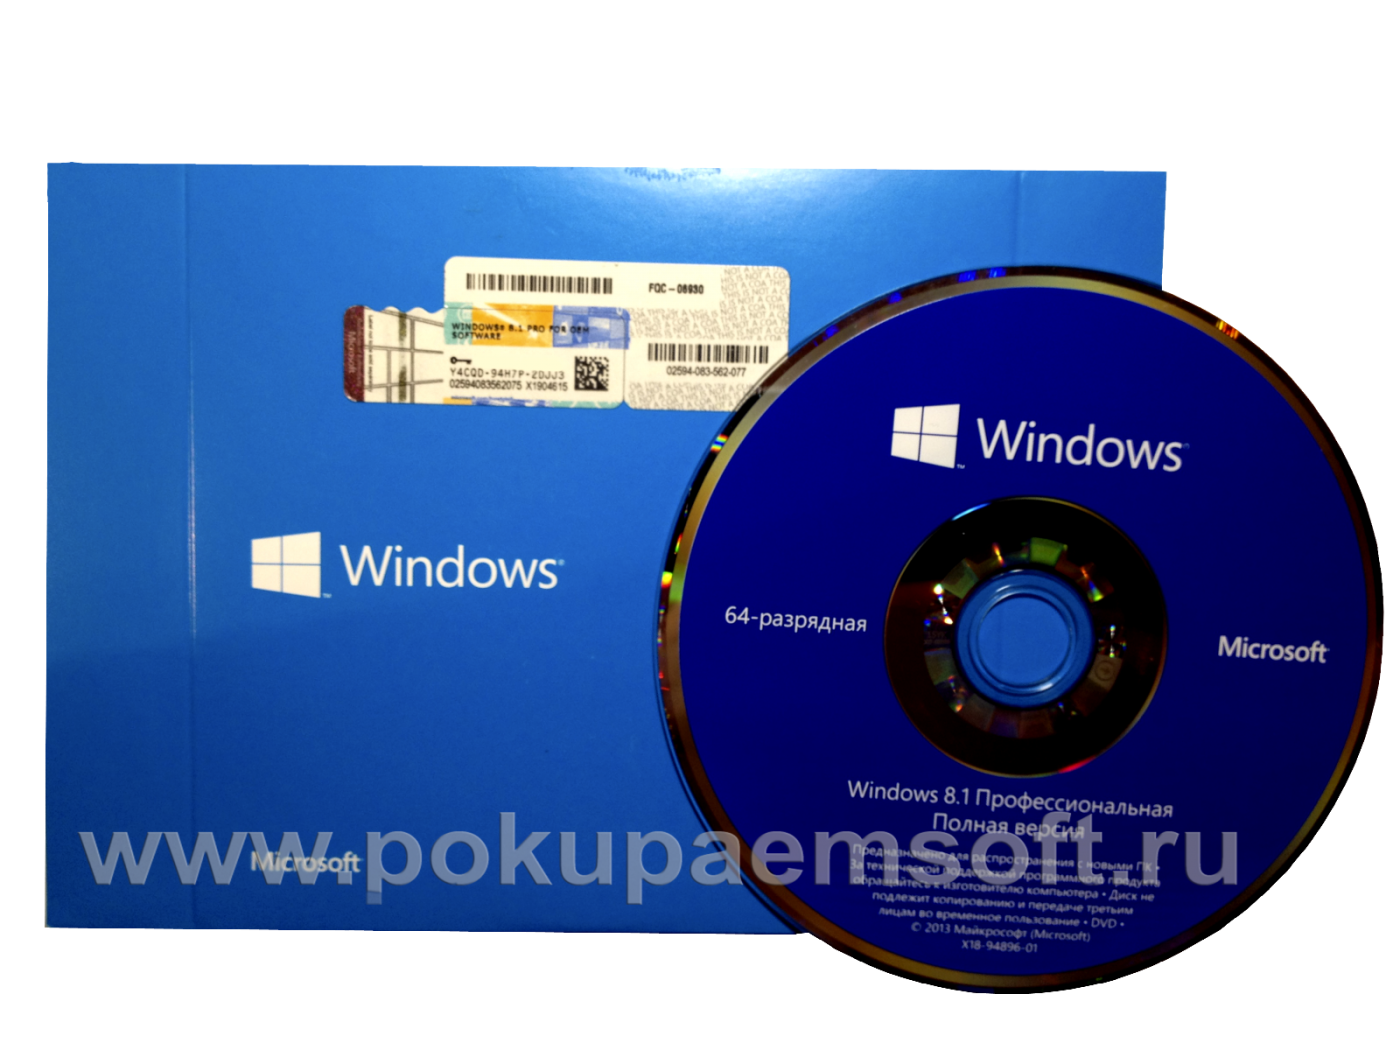 Pokupaemsoft.ru покупаем Windows 8.1 oem бу